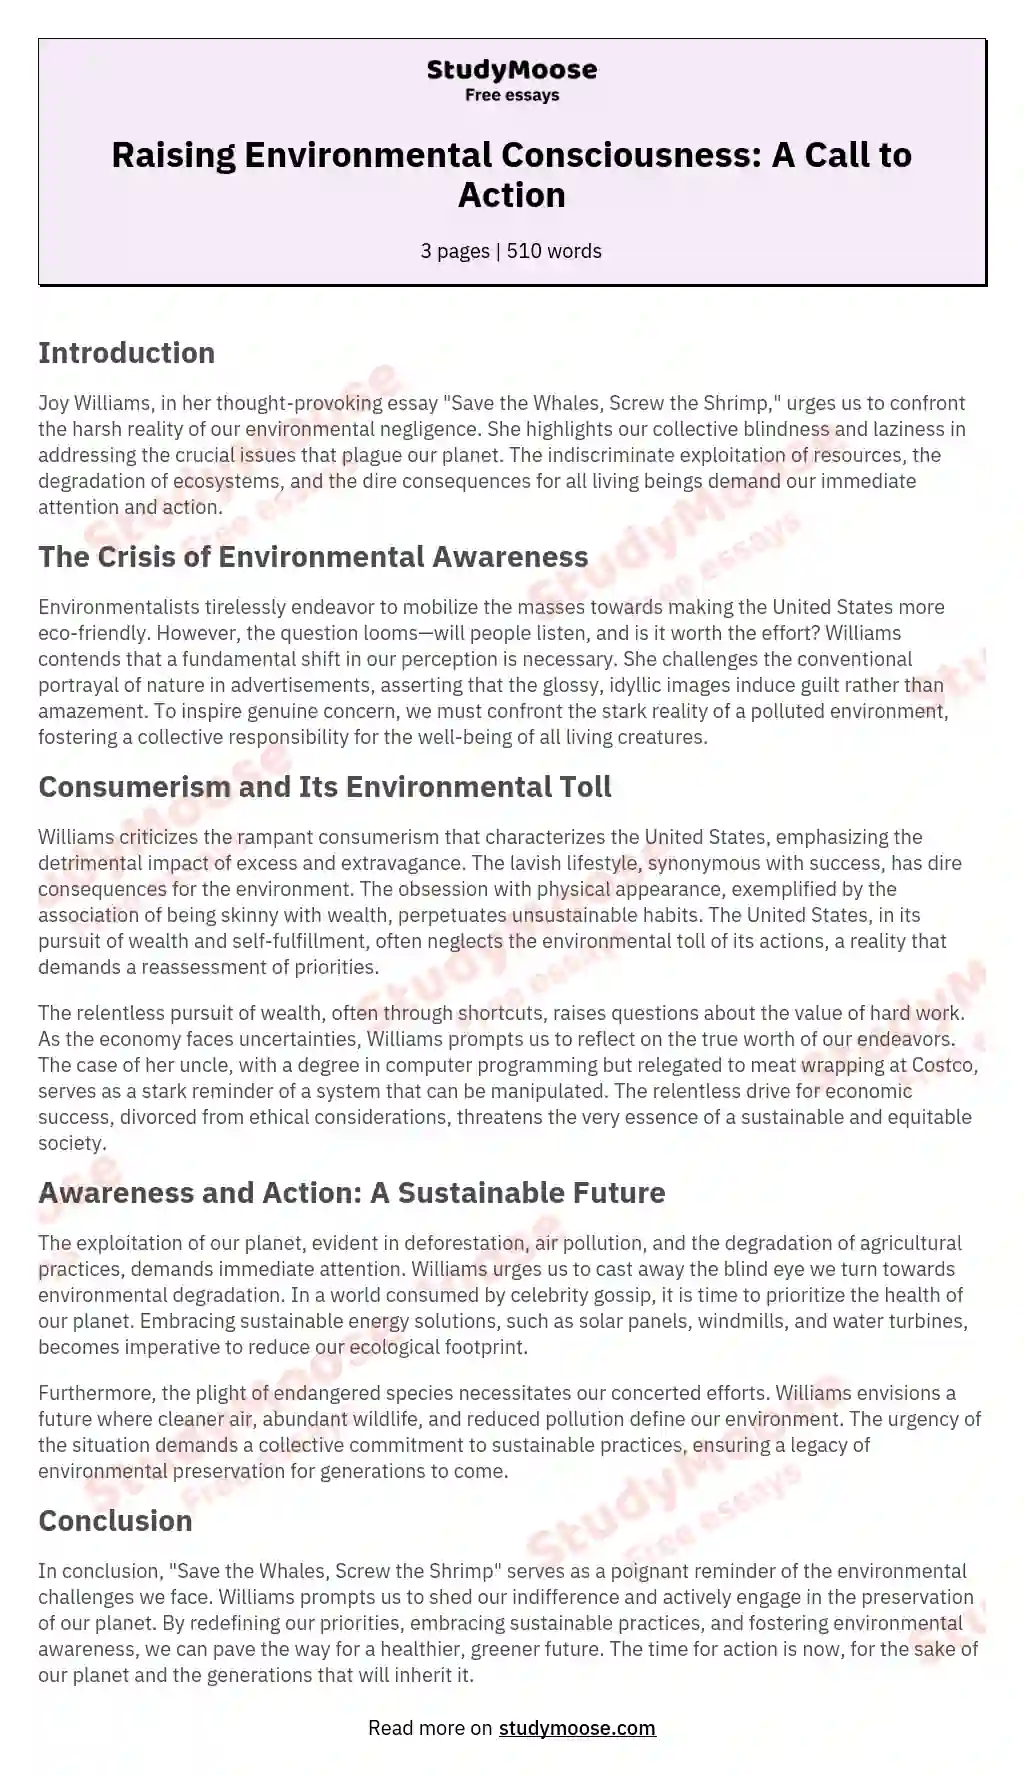 Raising Environmental Consciousness: A Call to Action essay